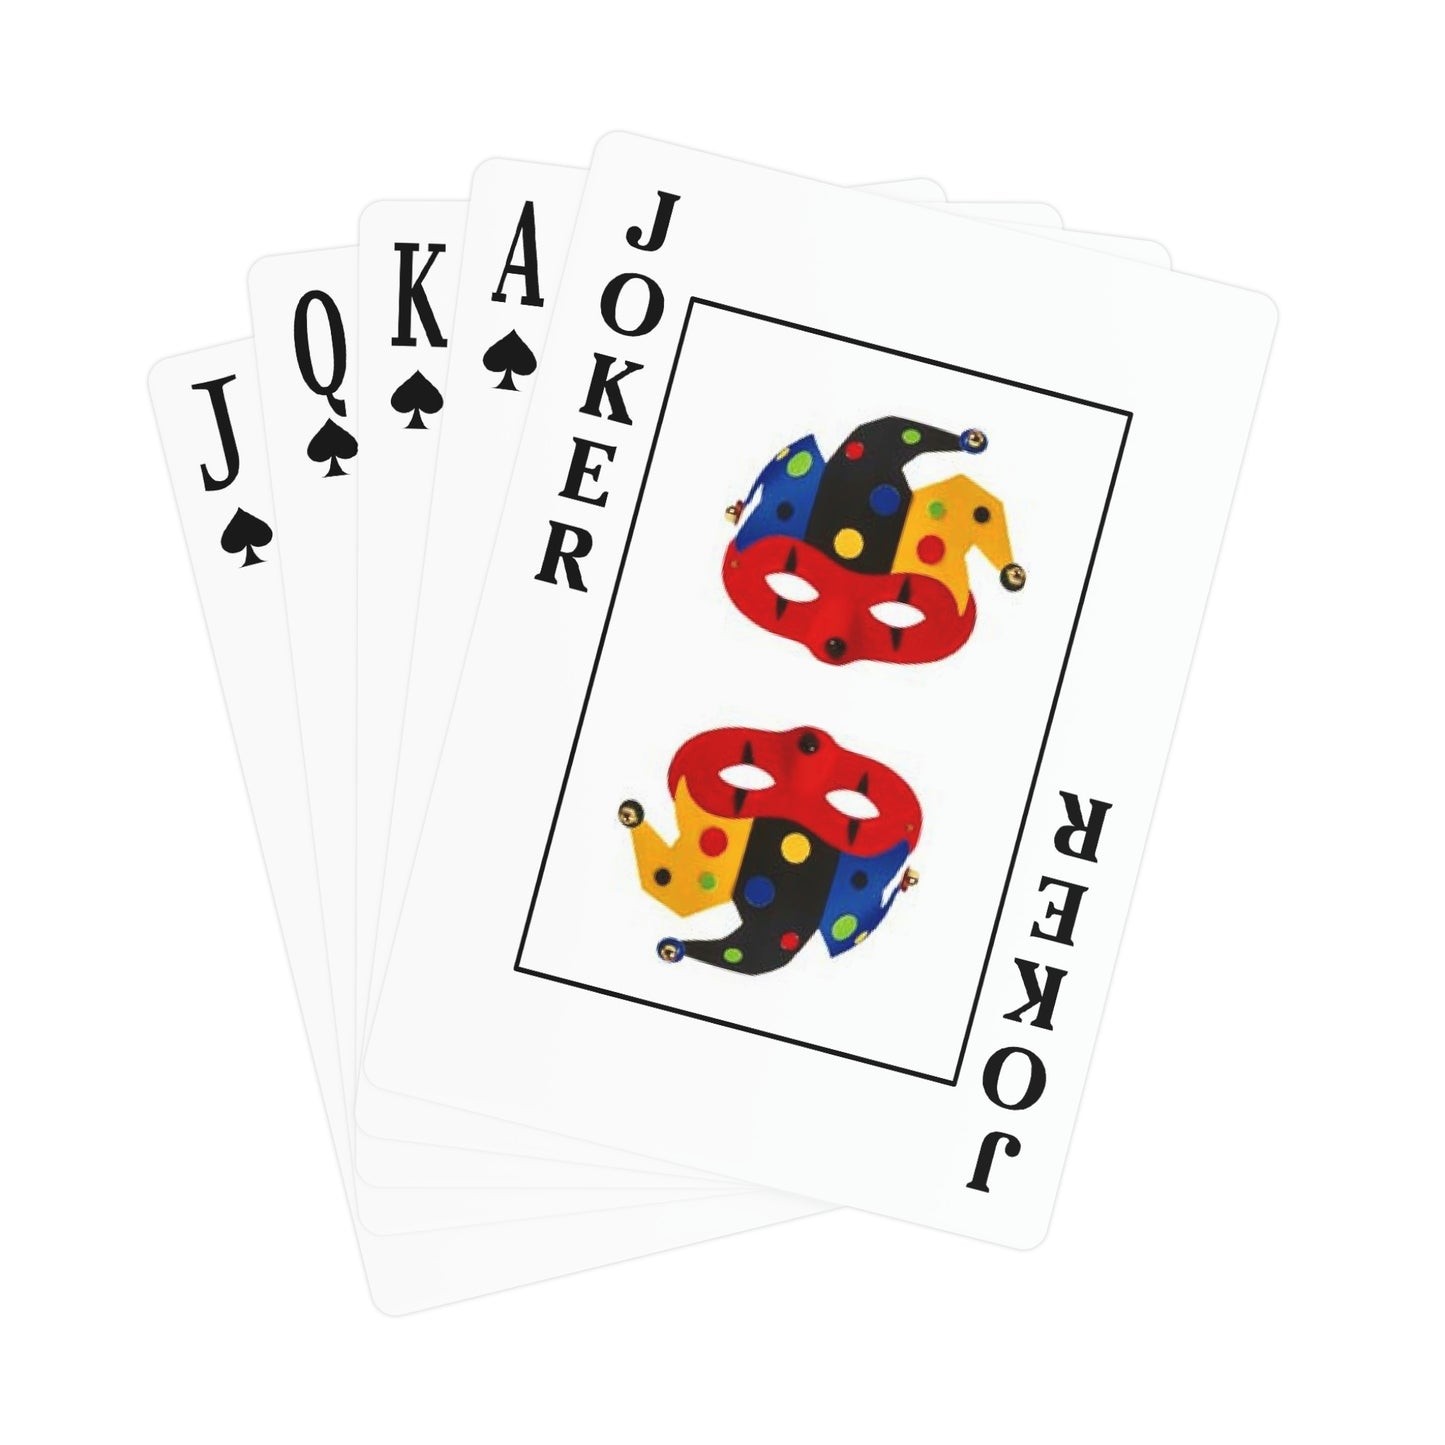 Angkor Tears - Playing Cards